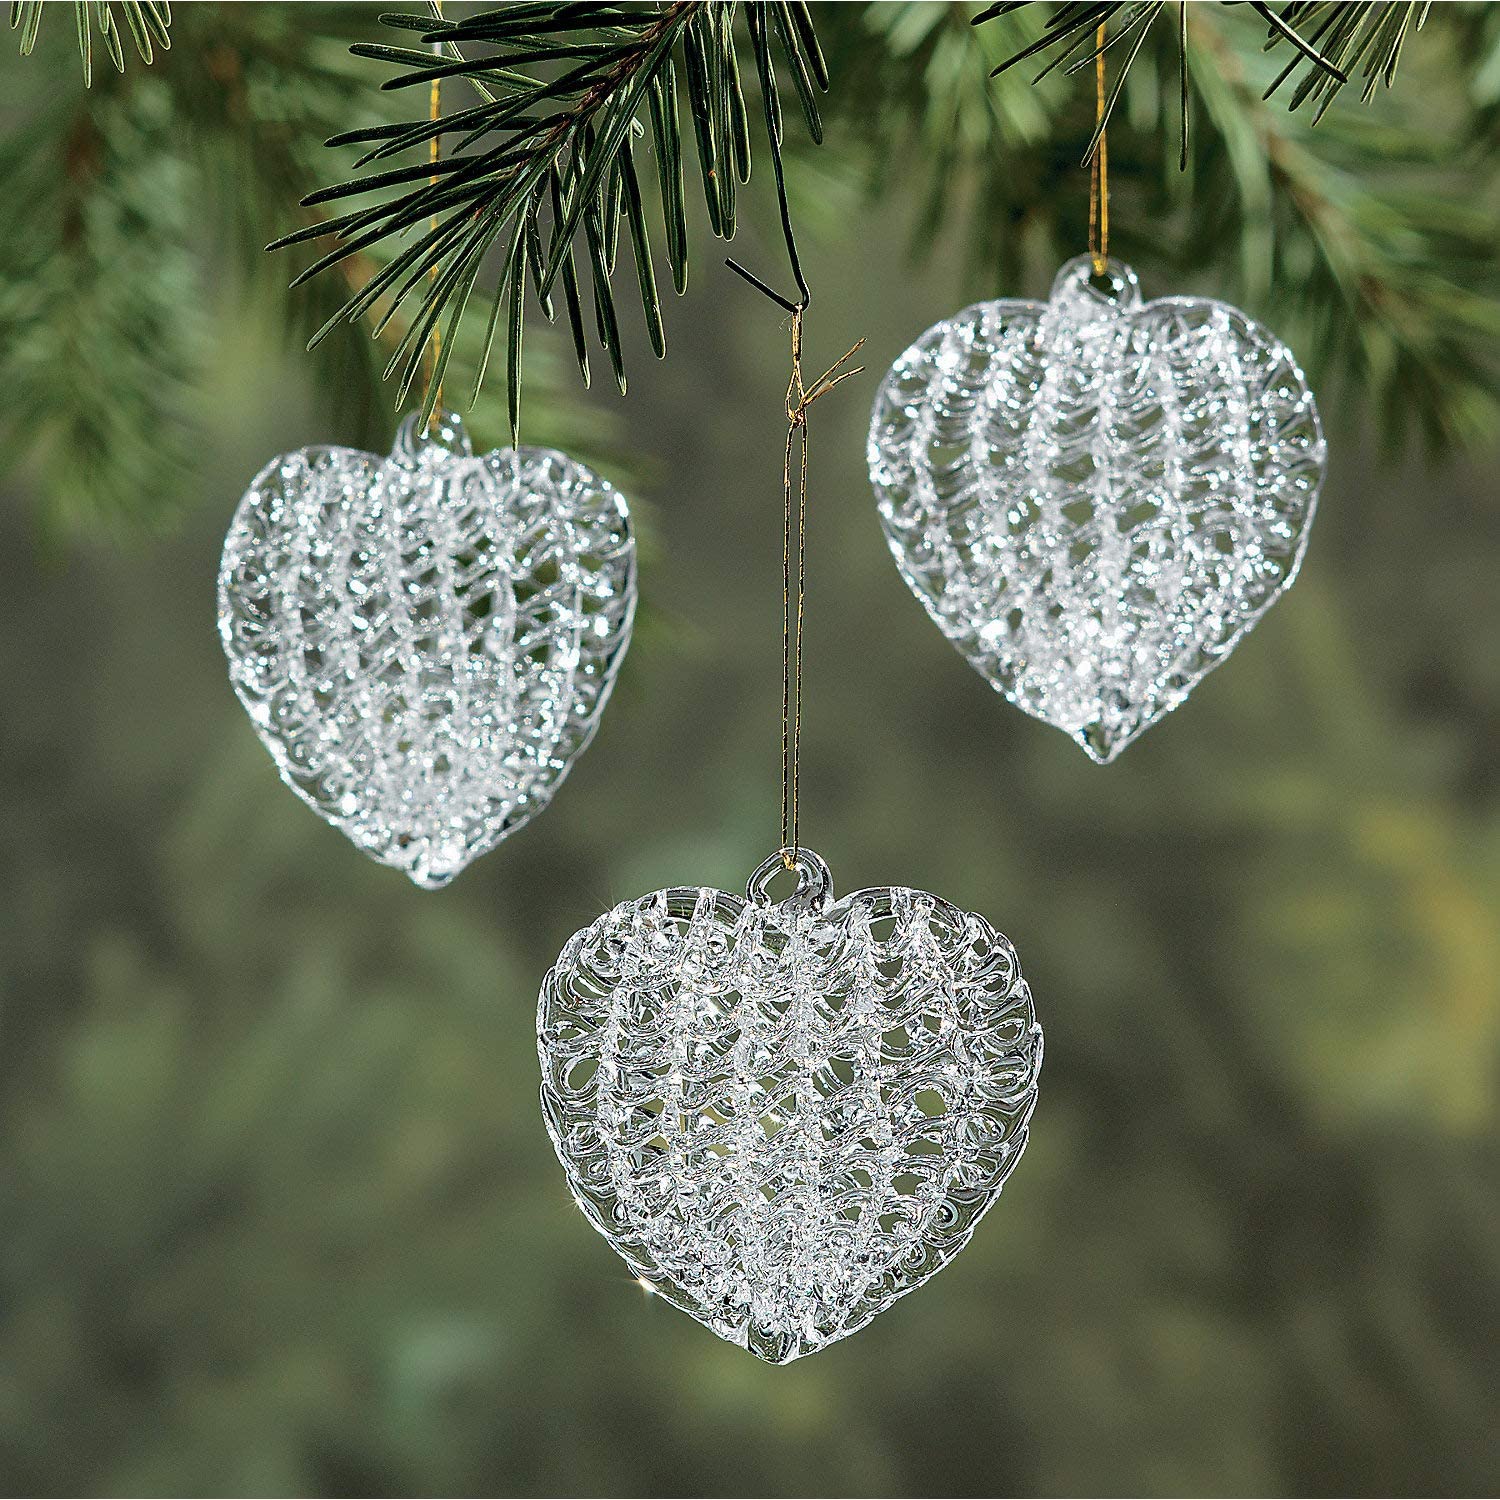 heart shaped spun glass ornaments